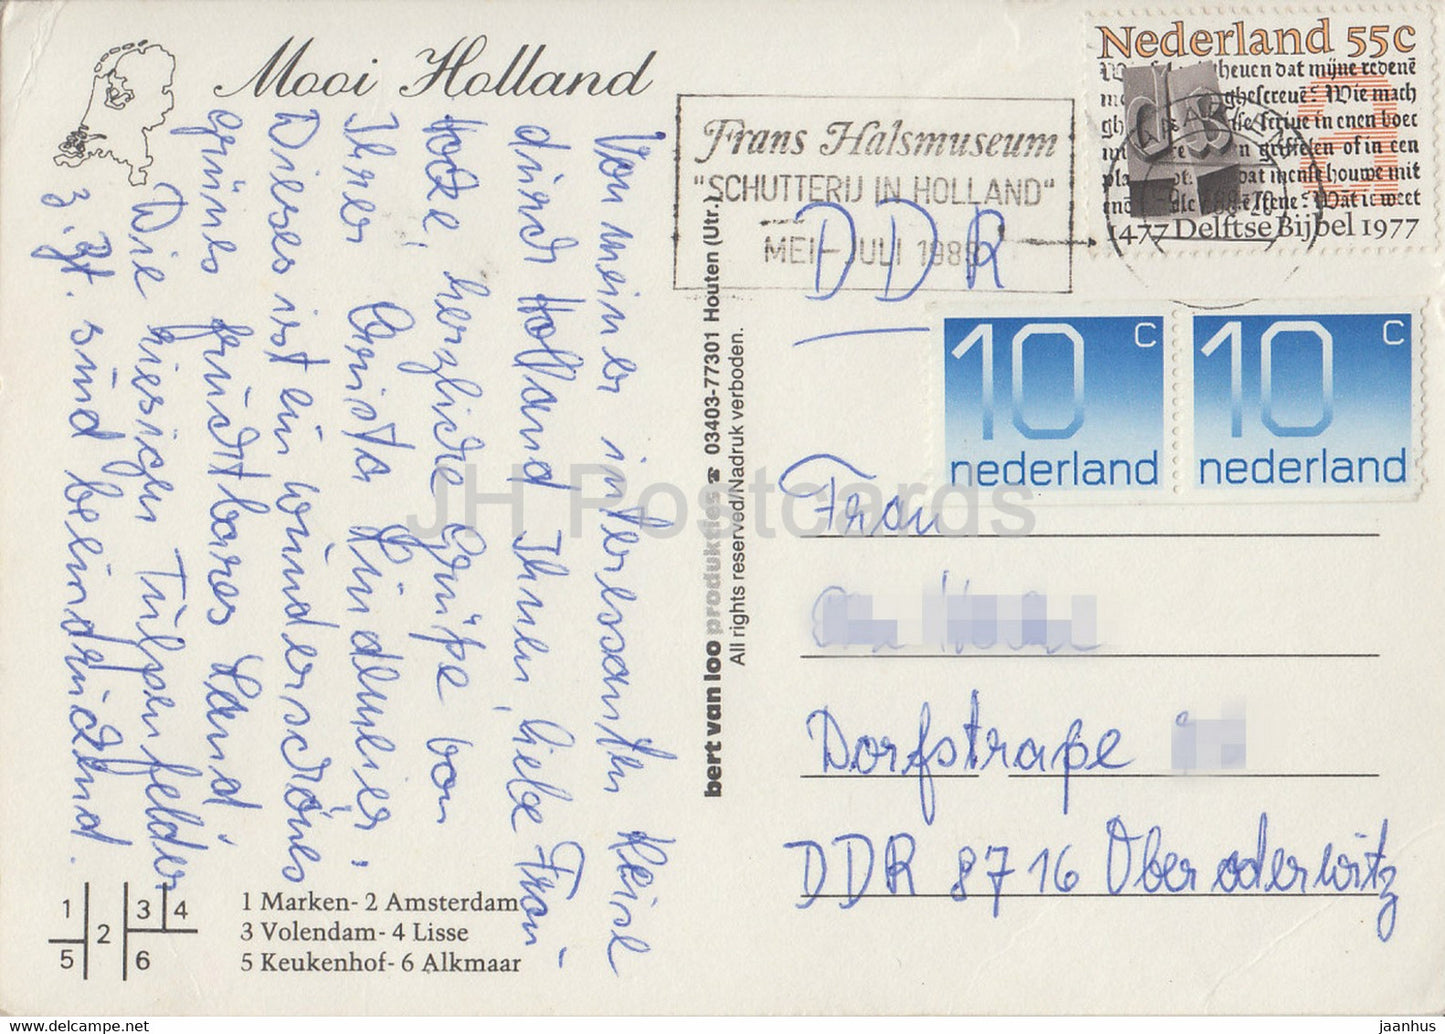 Mooi Holland - cheese - Amsterdam - Volendam - Lisse - Keukenhof - Folk Costumes - 1988 - Netherlands - used